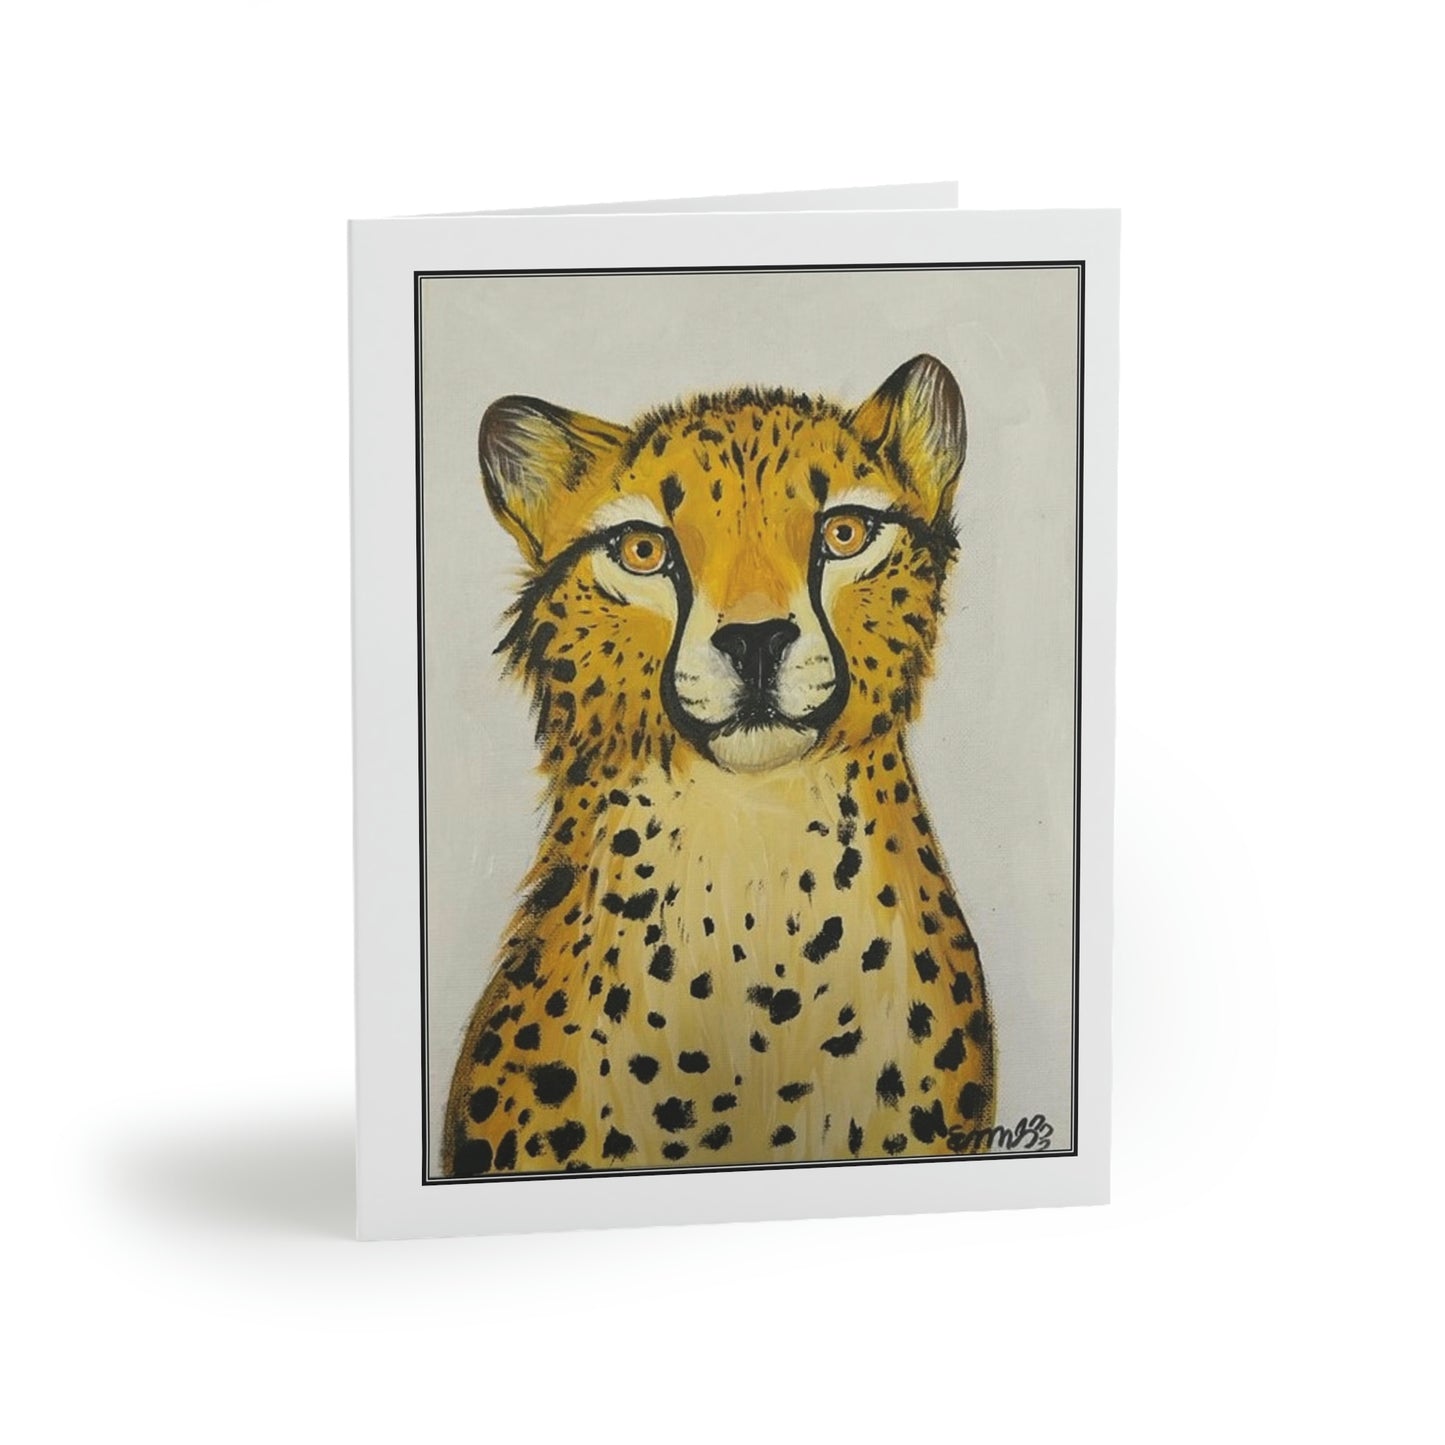 Cheetah - Greeting cards